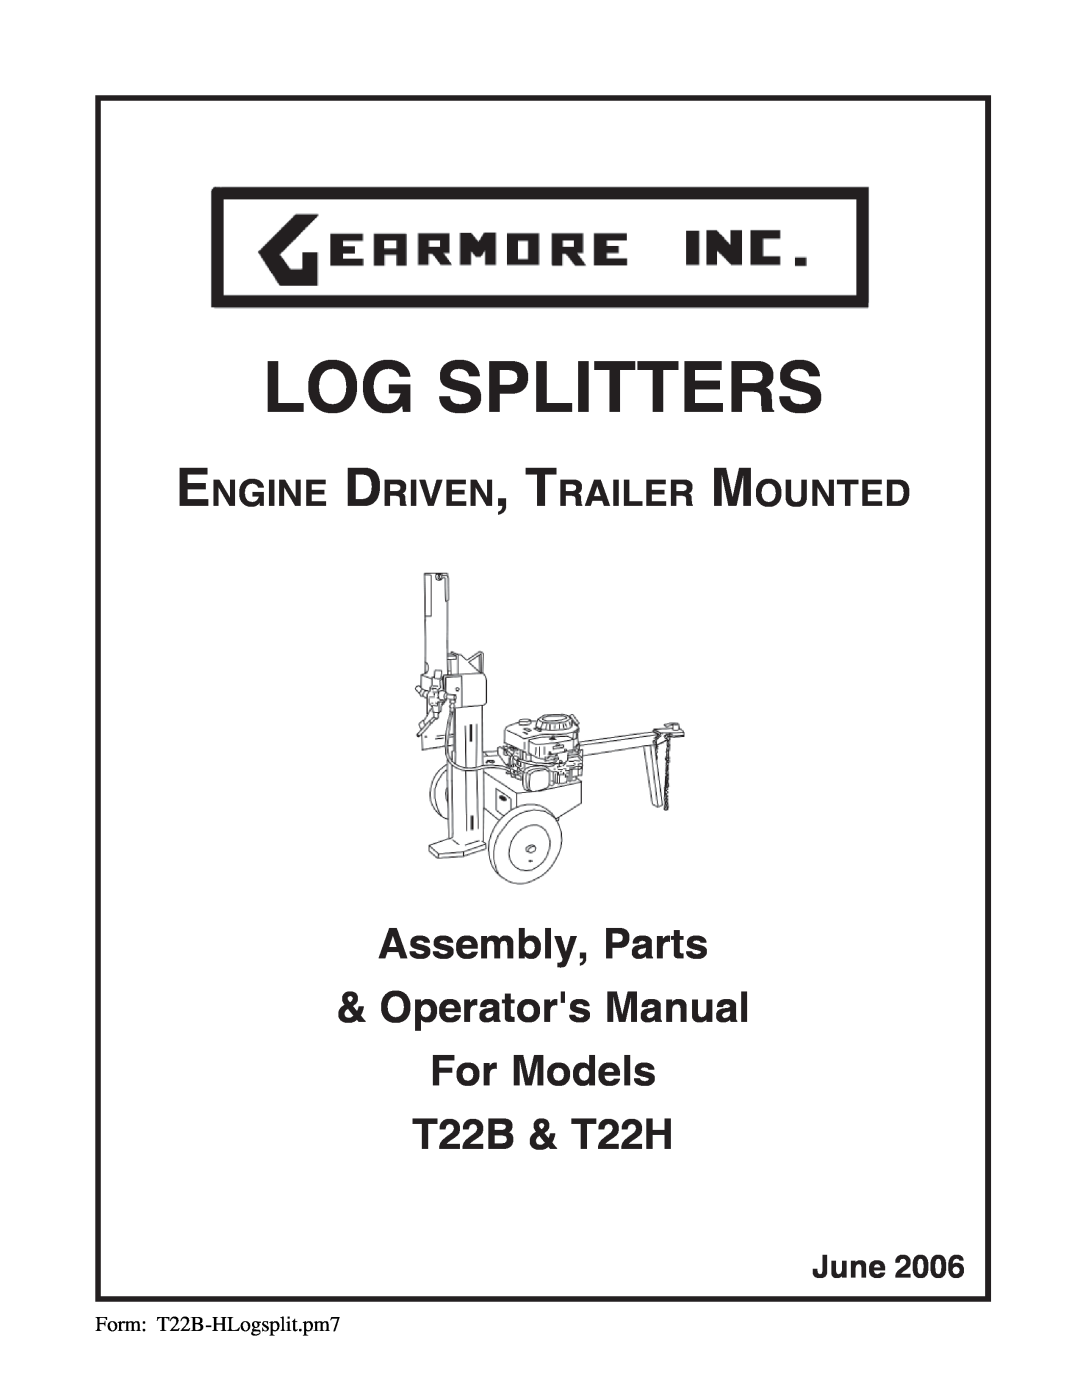 Briggs & Stratton T22B & T22H manual June, Log Splitters, Assembly, Parts &Operators Manual For Models 